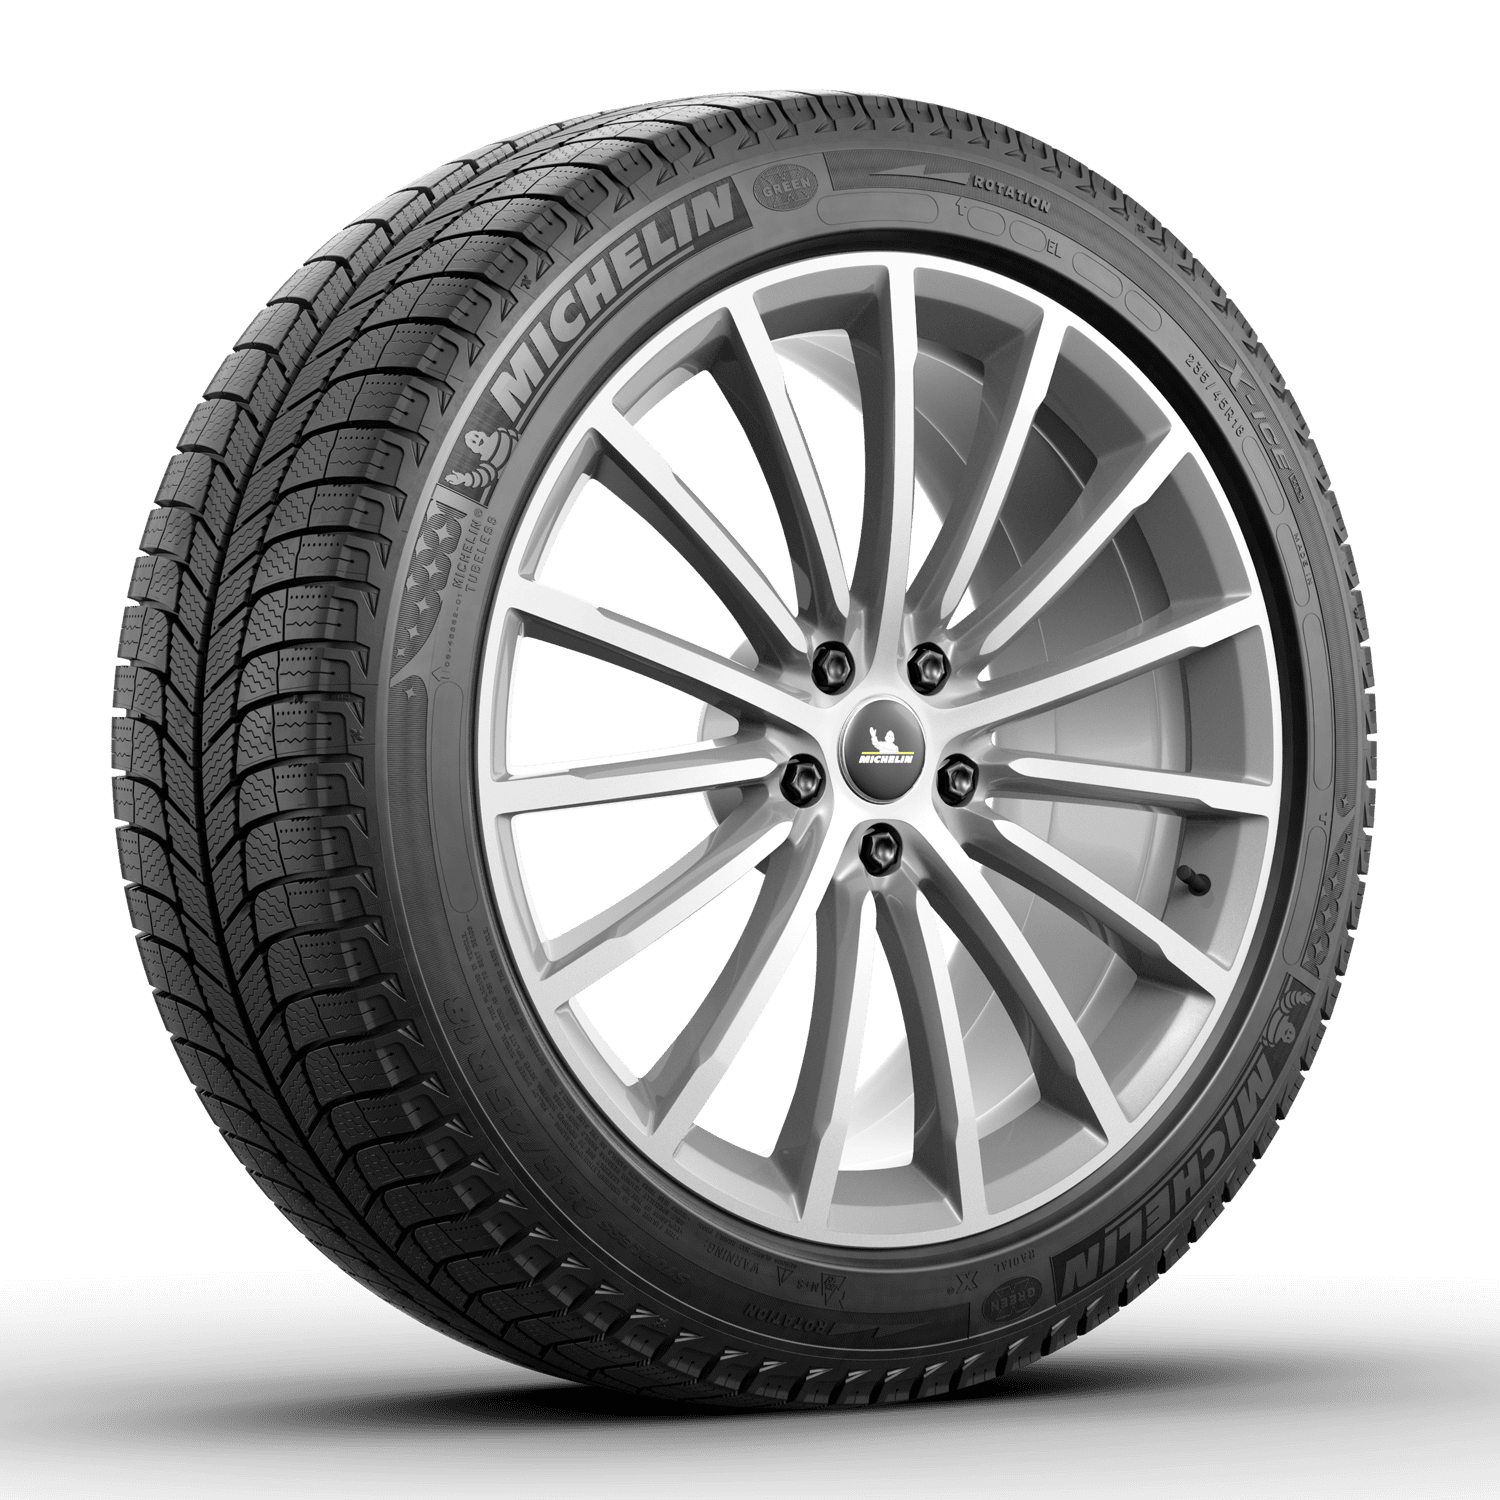 Michelin X-Ice Xi3 225/45R17 94 H Tire